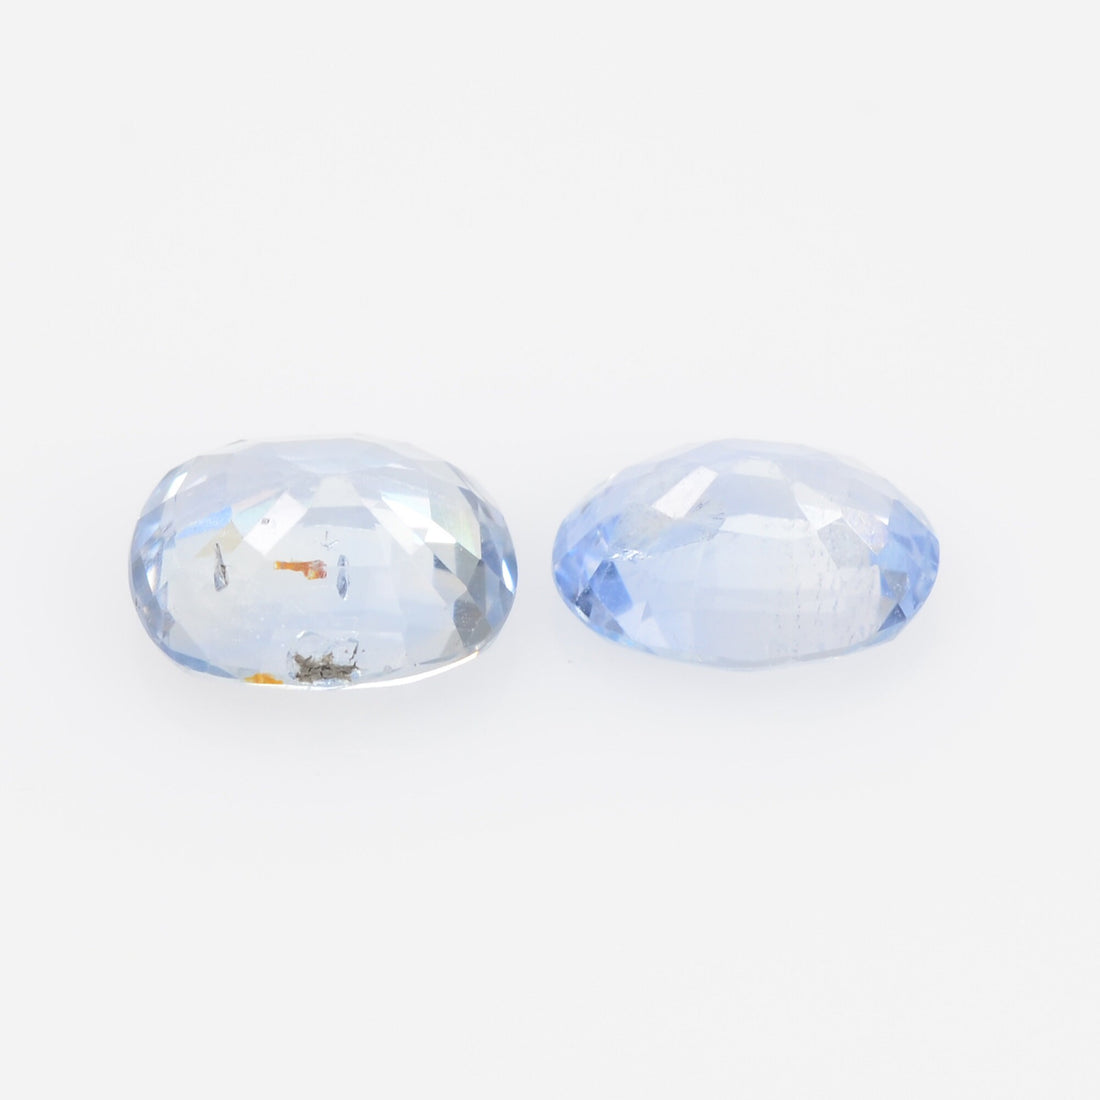 Lots Natural Blue Sapphire Loose Gemstone Oval & Cushion Cut